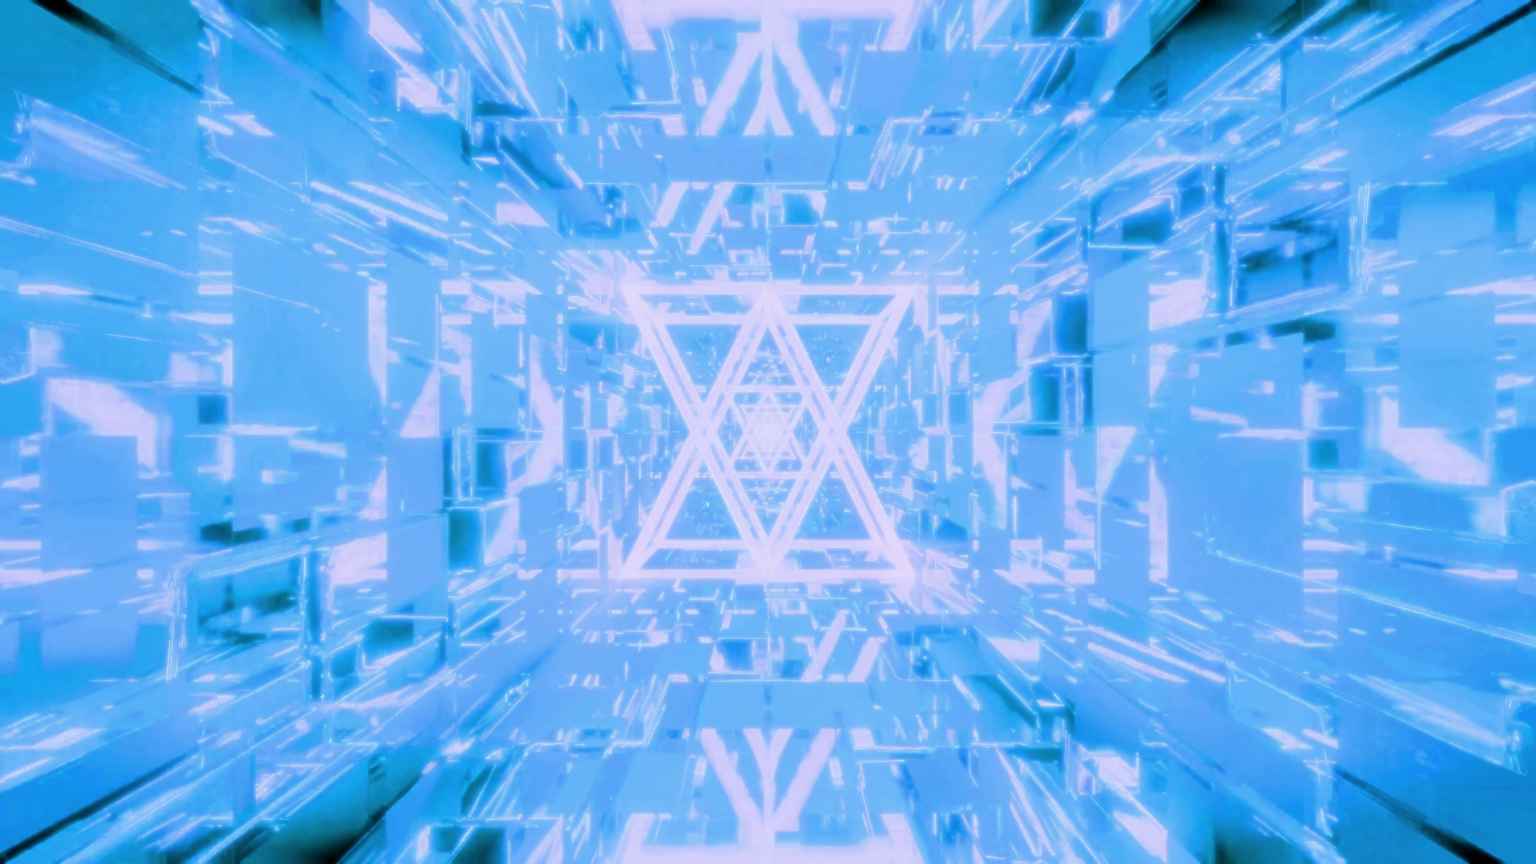 4K Futuristic Light Blue Tunnel Motion Background || Free To Use Video || VFX 4K Screensaver